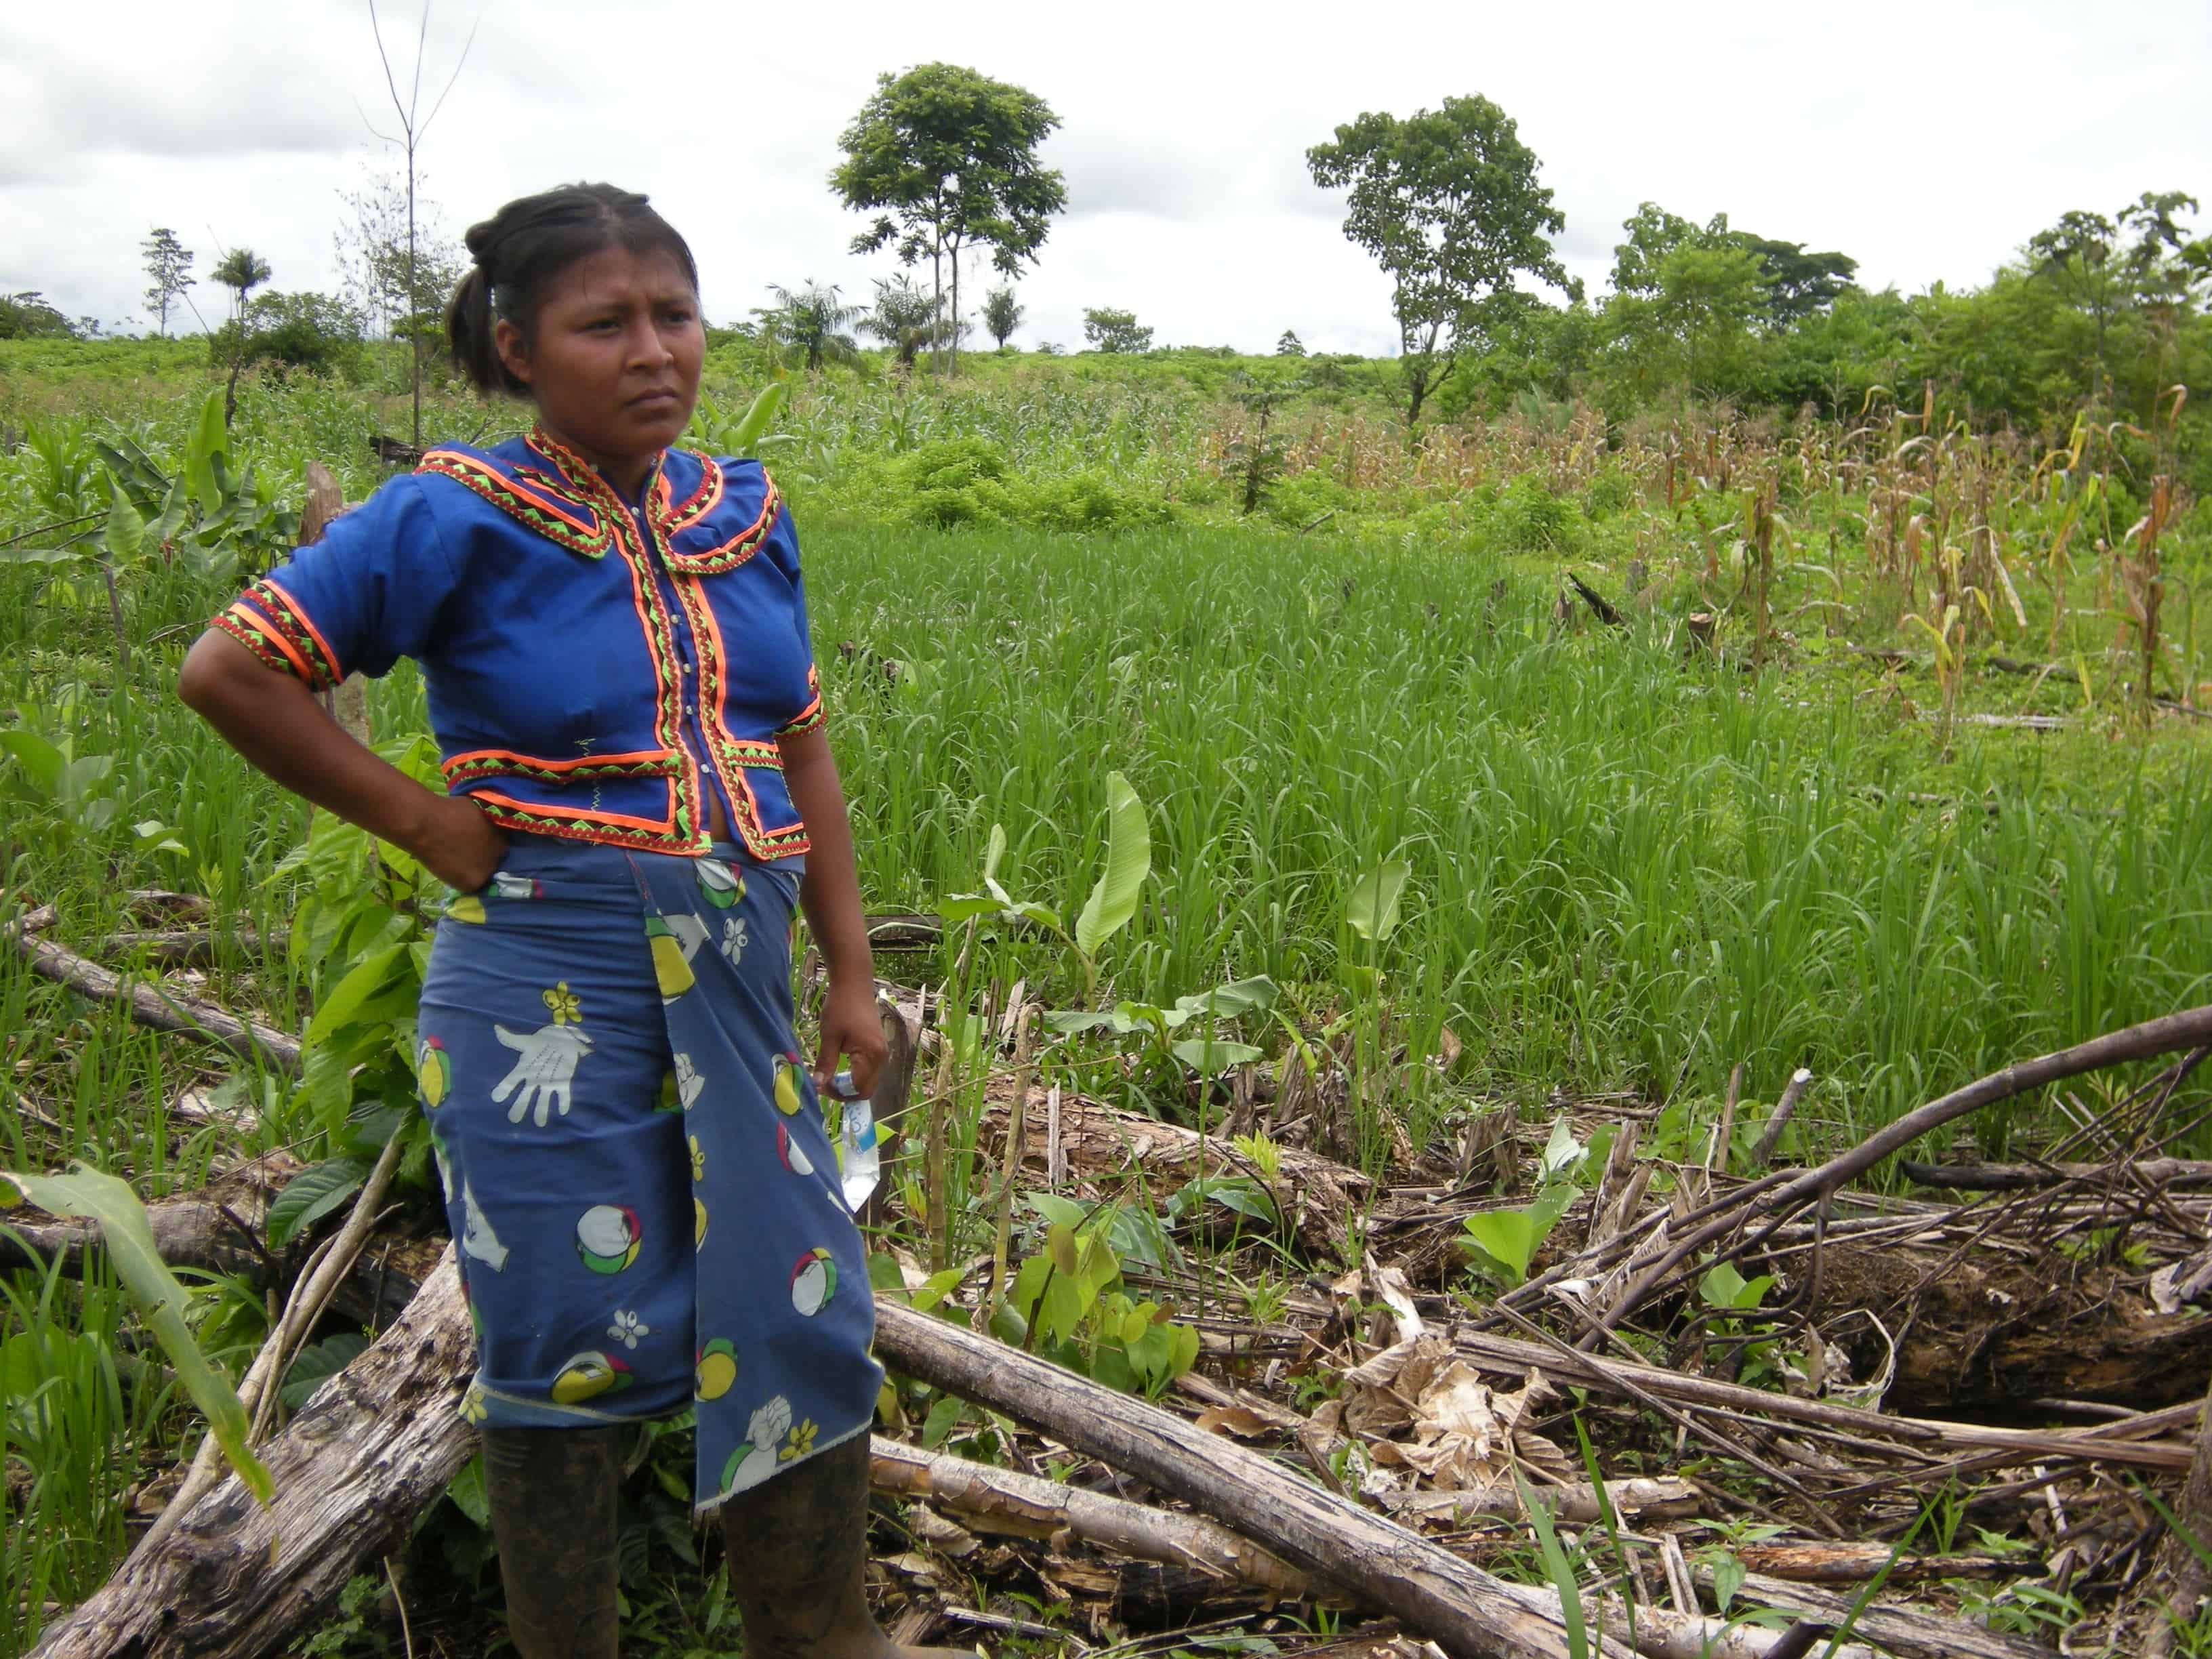 FRONT local woman, COCOMOPOCA territory, photo credit SCIAF